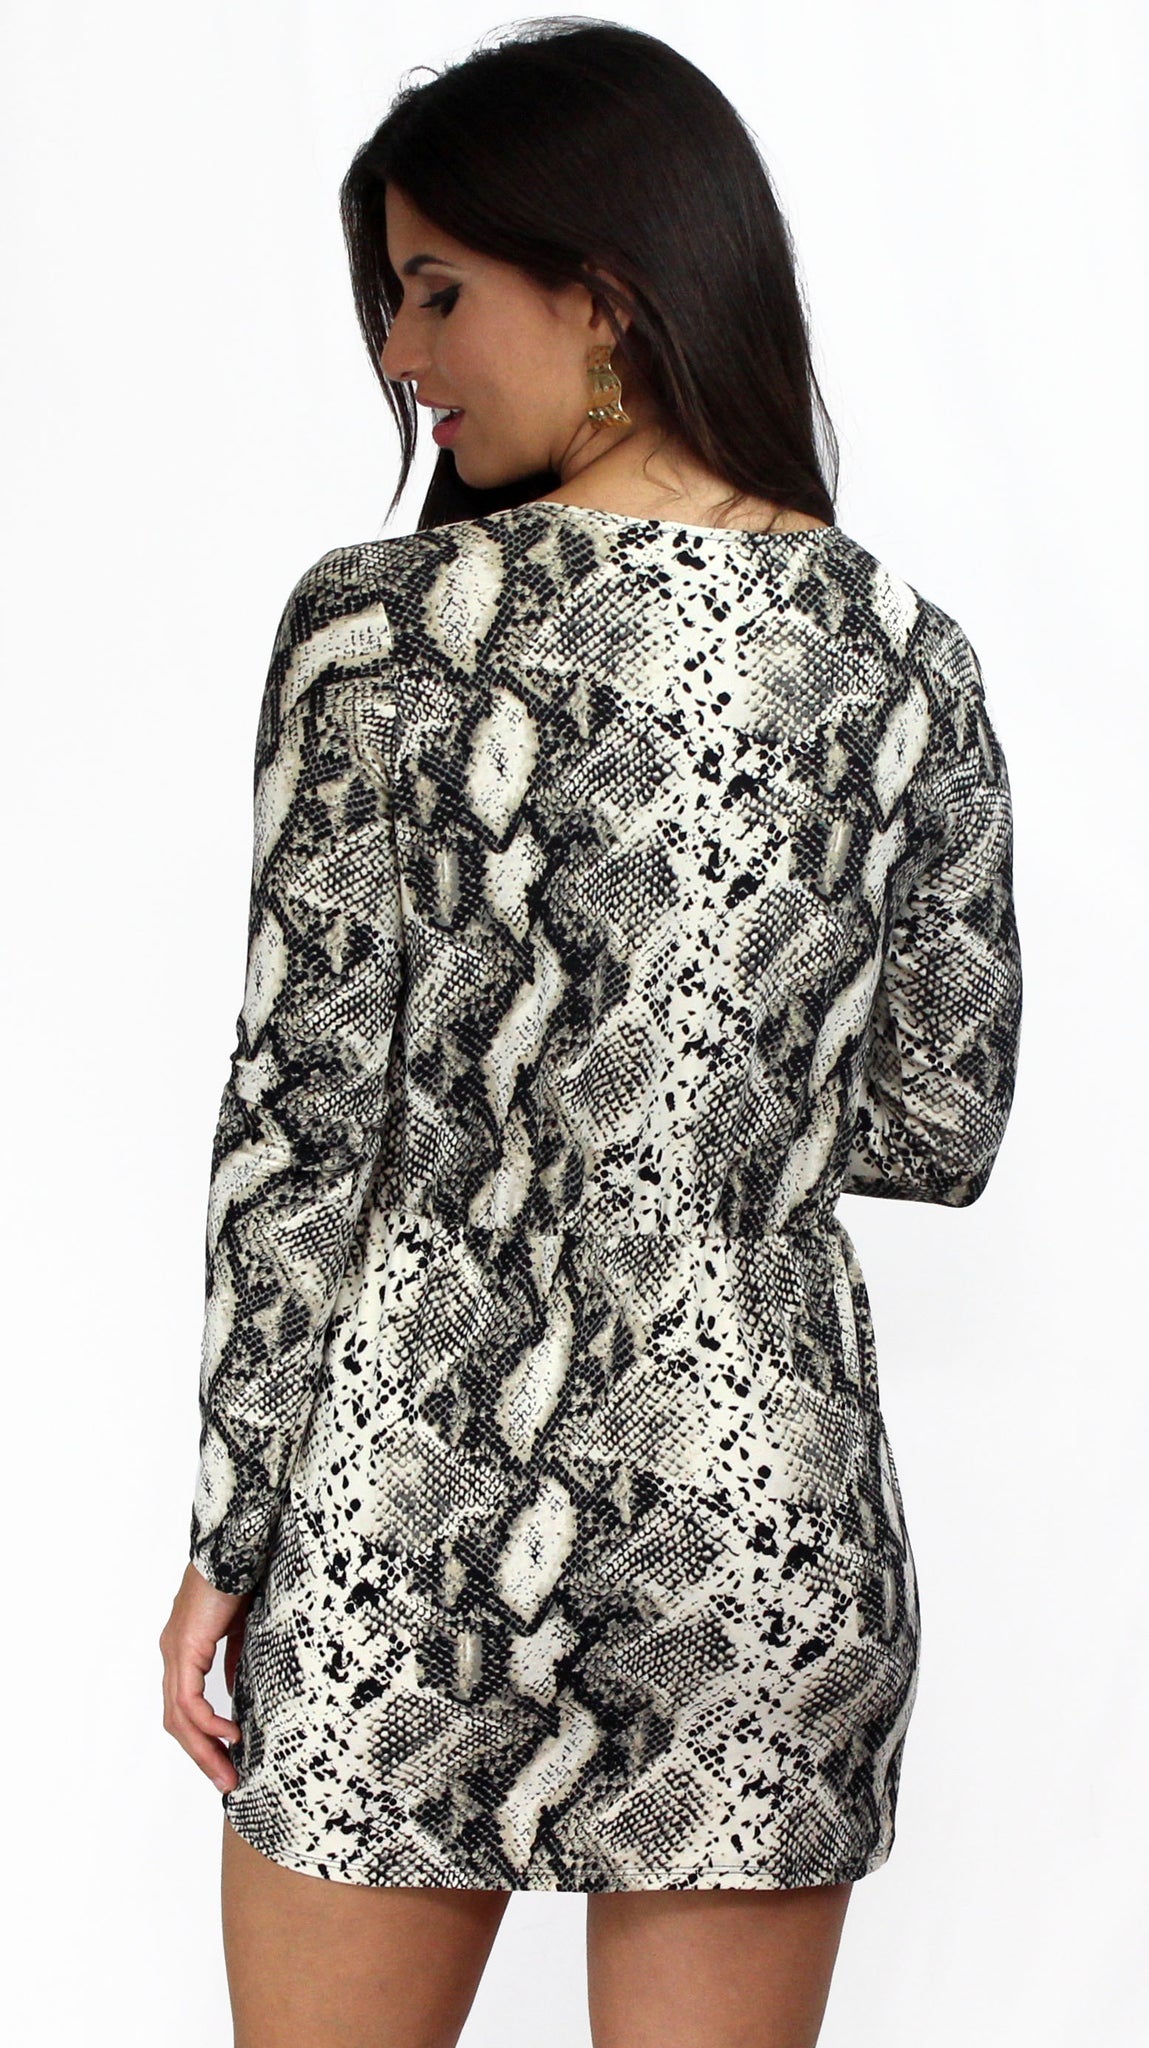 Wonderfully Wild Grey Snake Print Dress